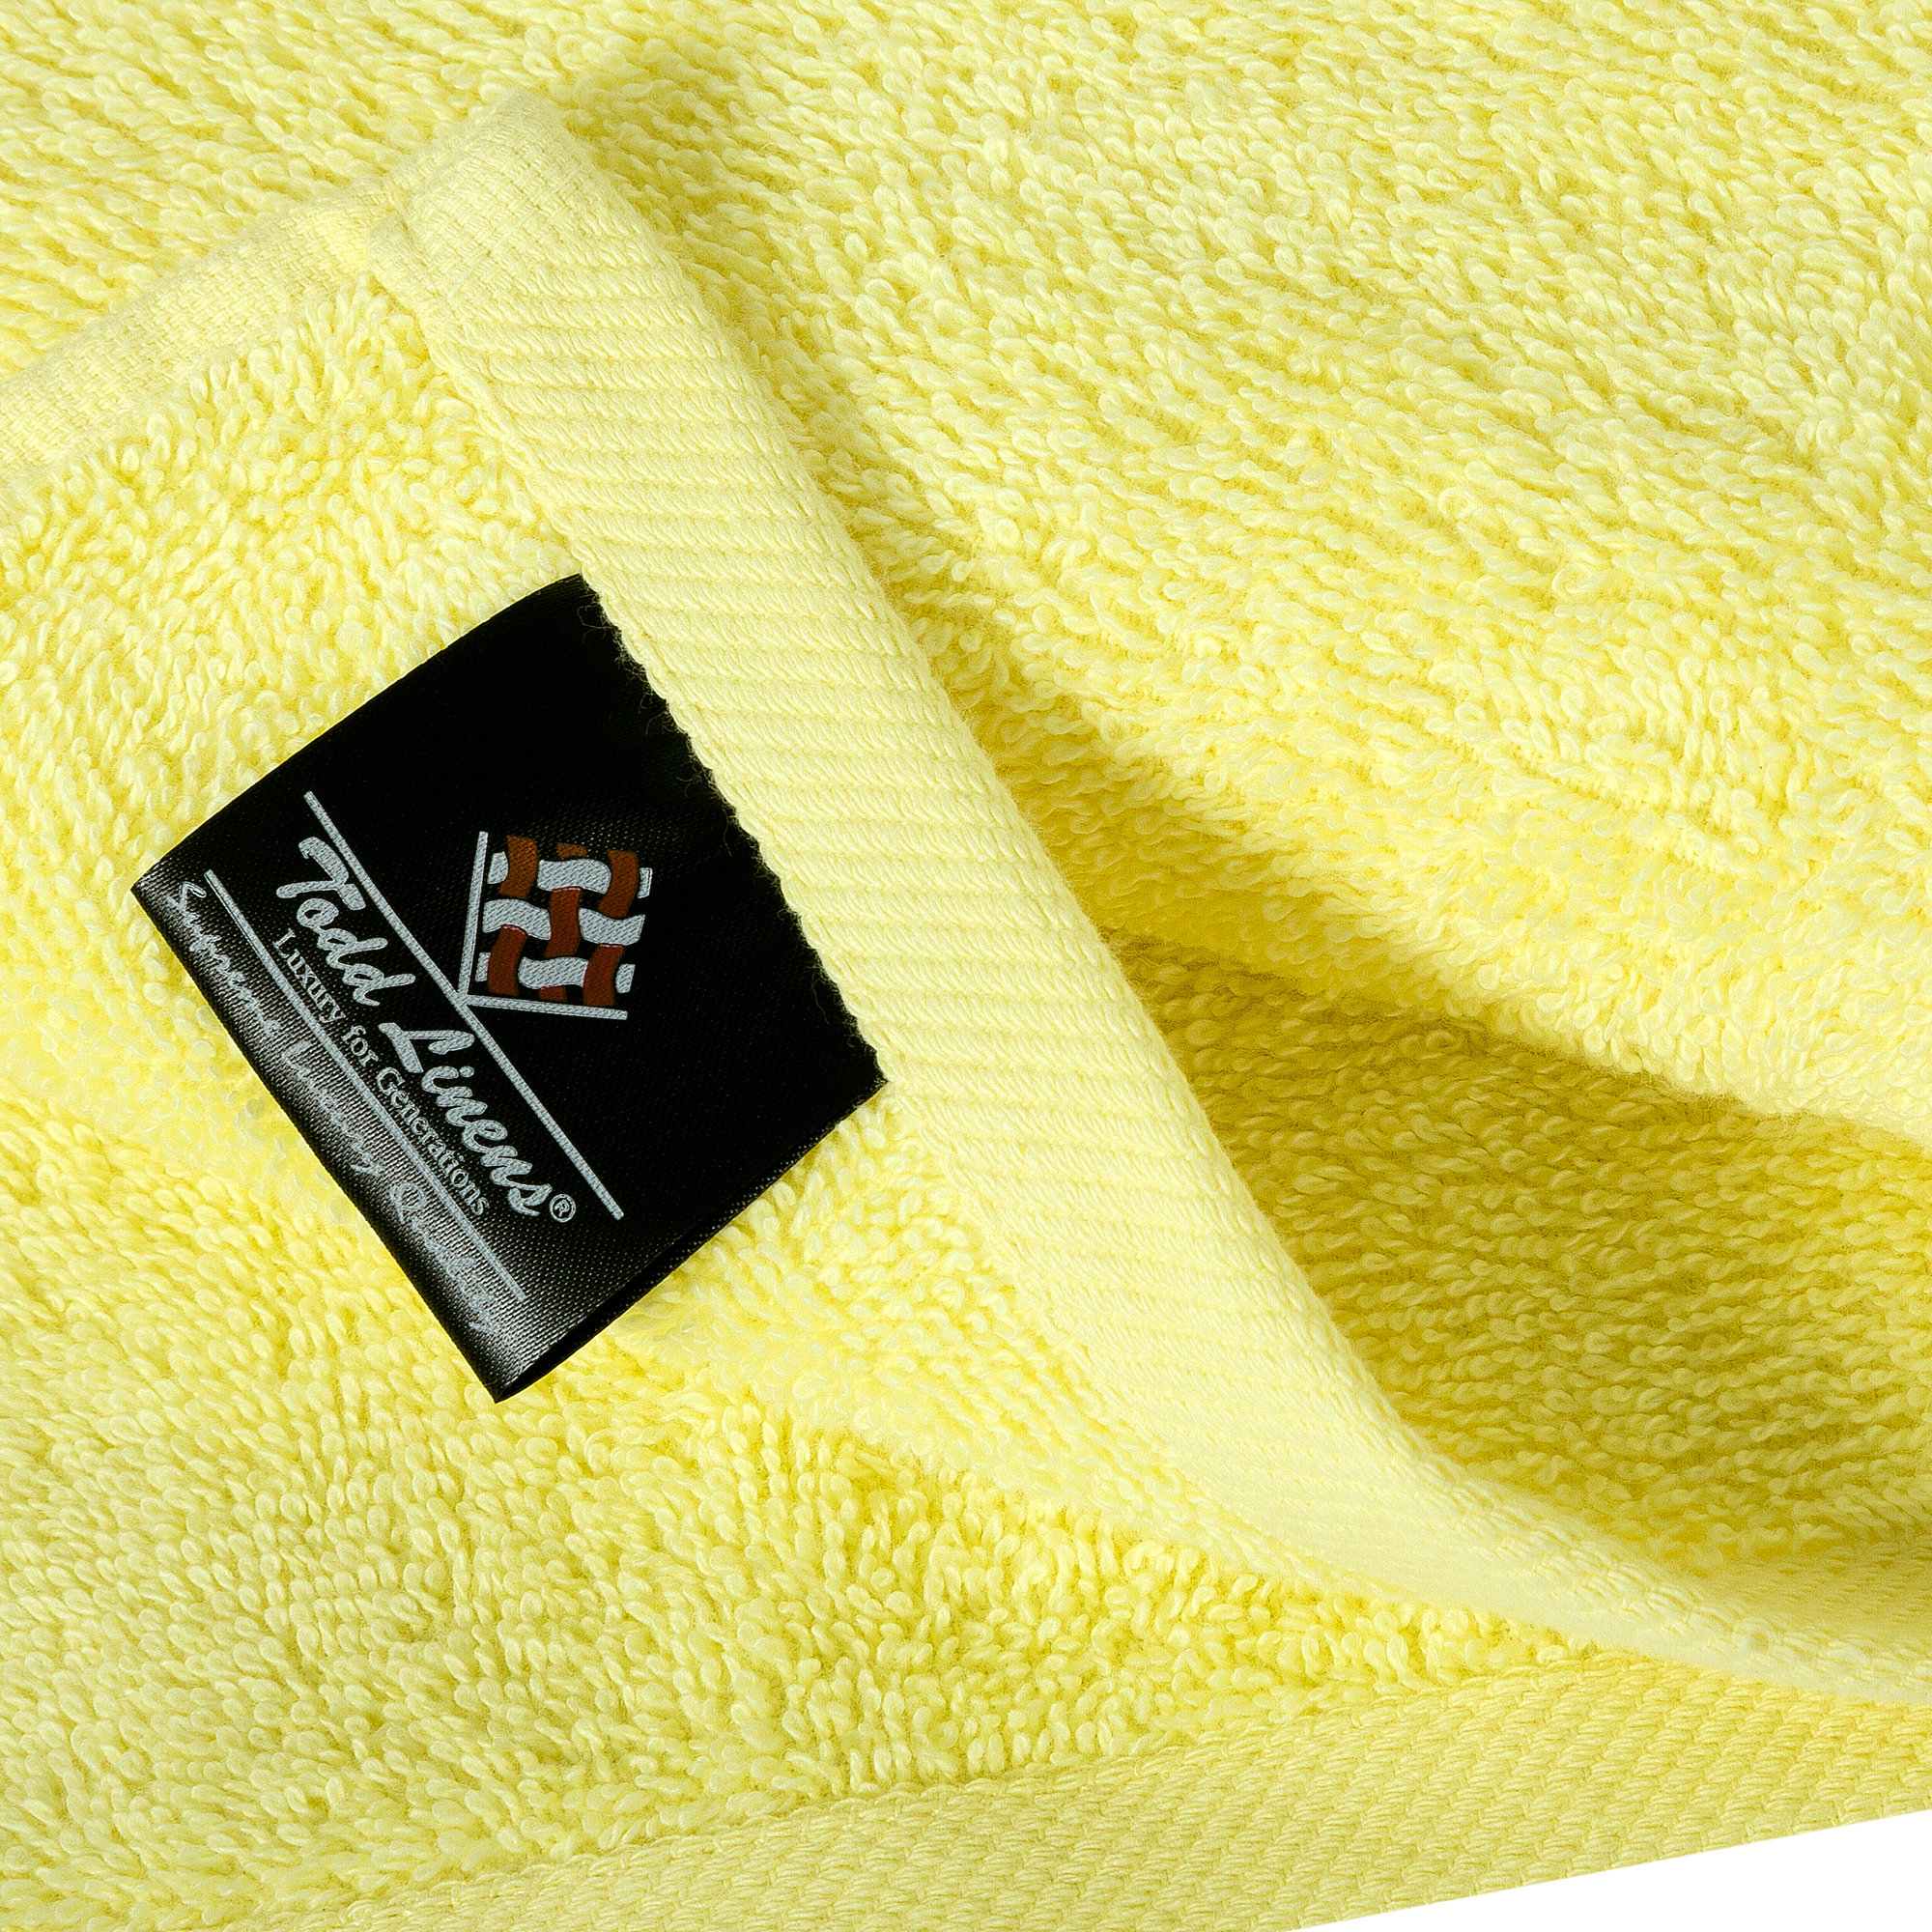 Bale Set 2pcs Lemon Plain Bath Towel